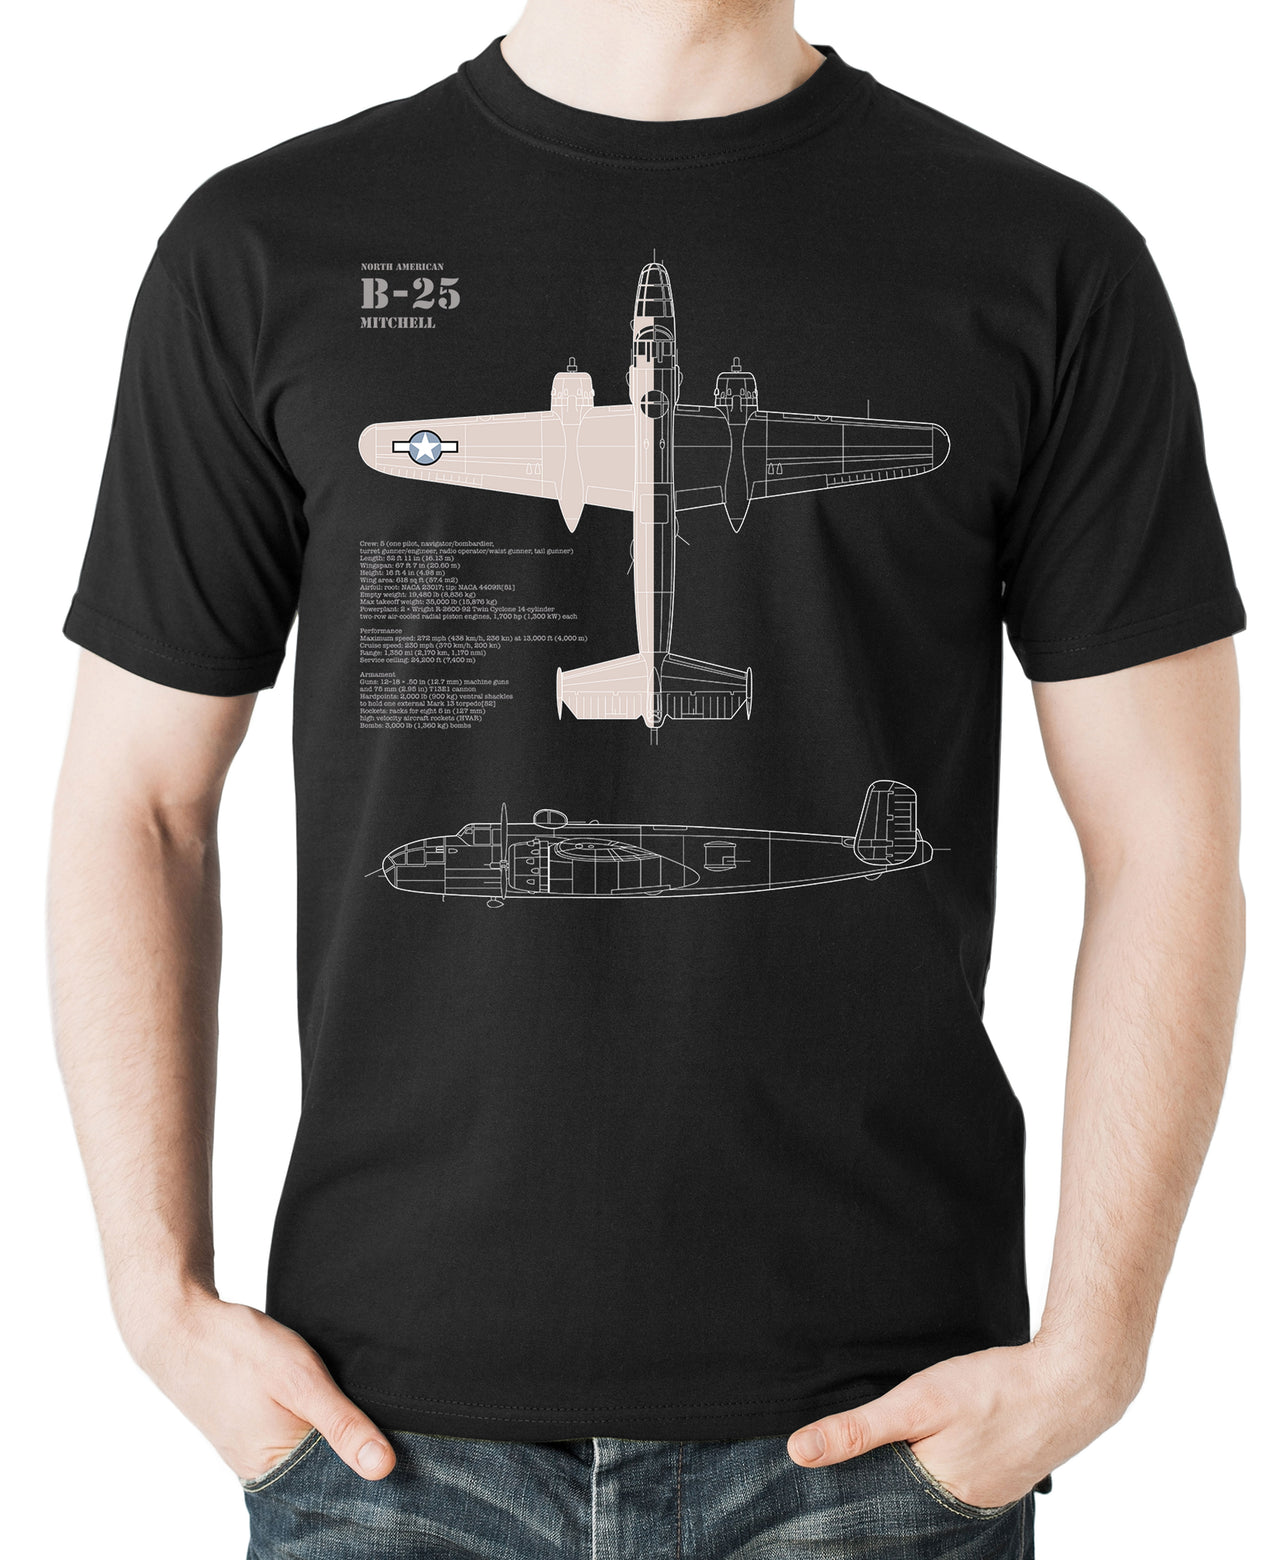 B-25 Mitchell - T-shirt